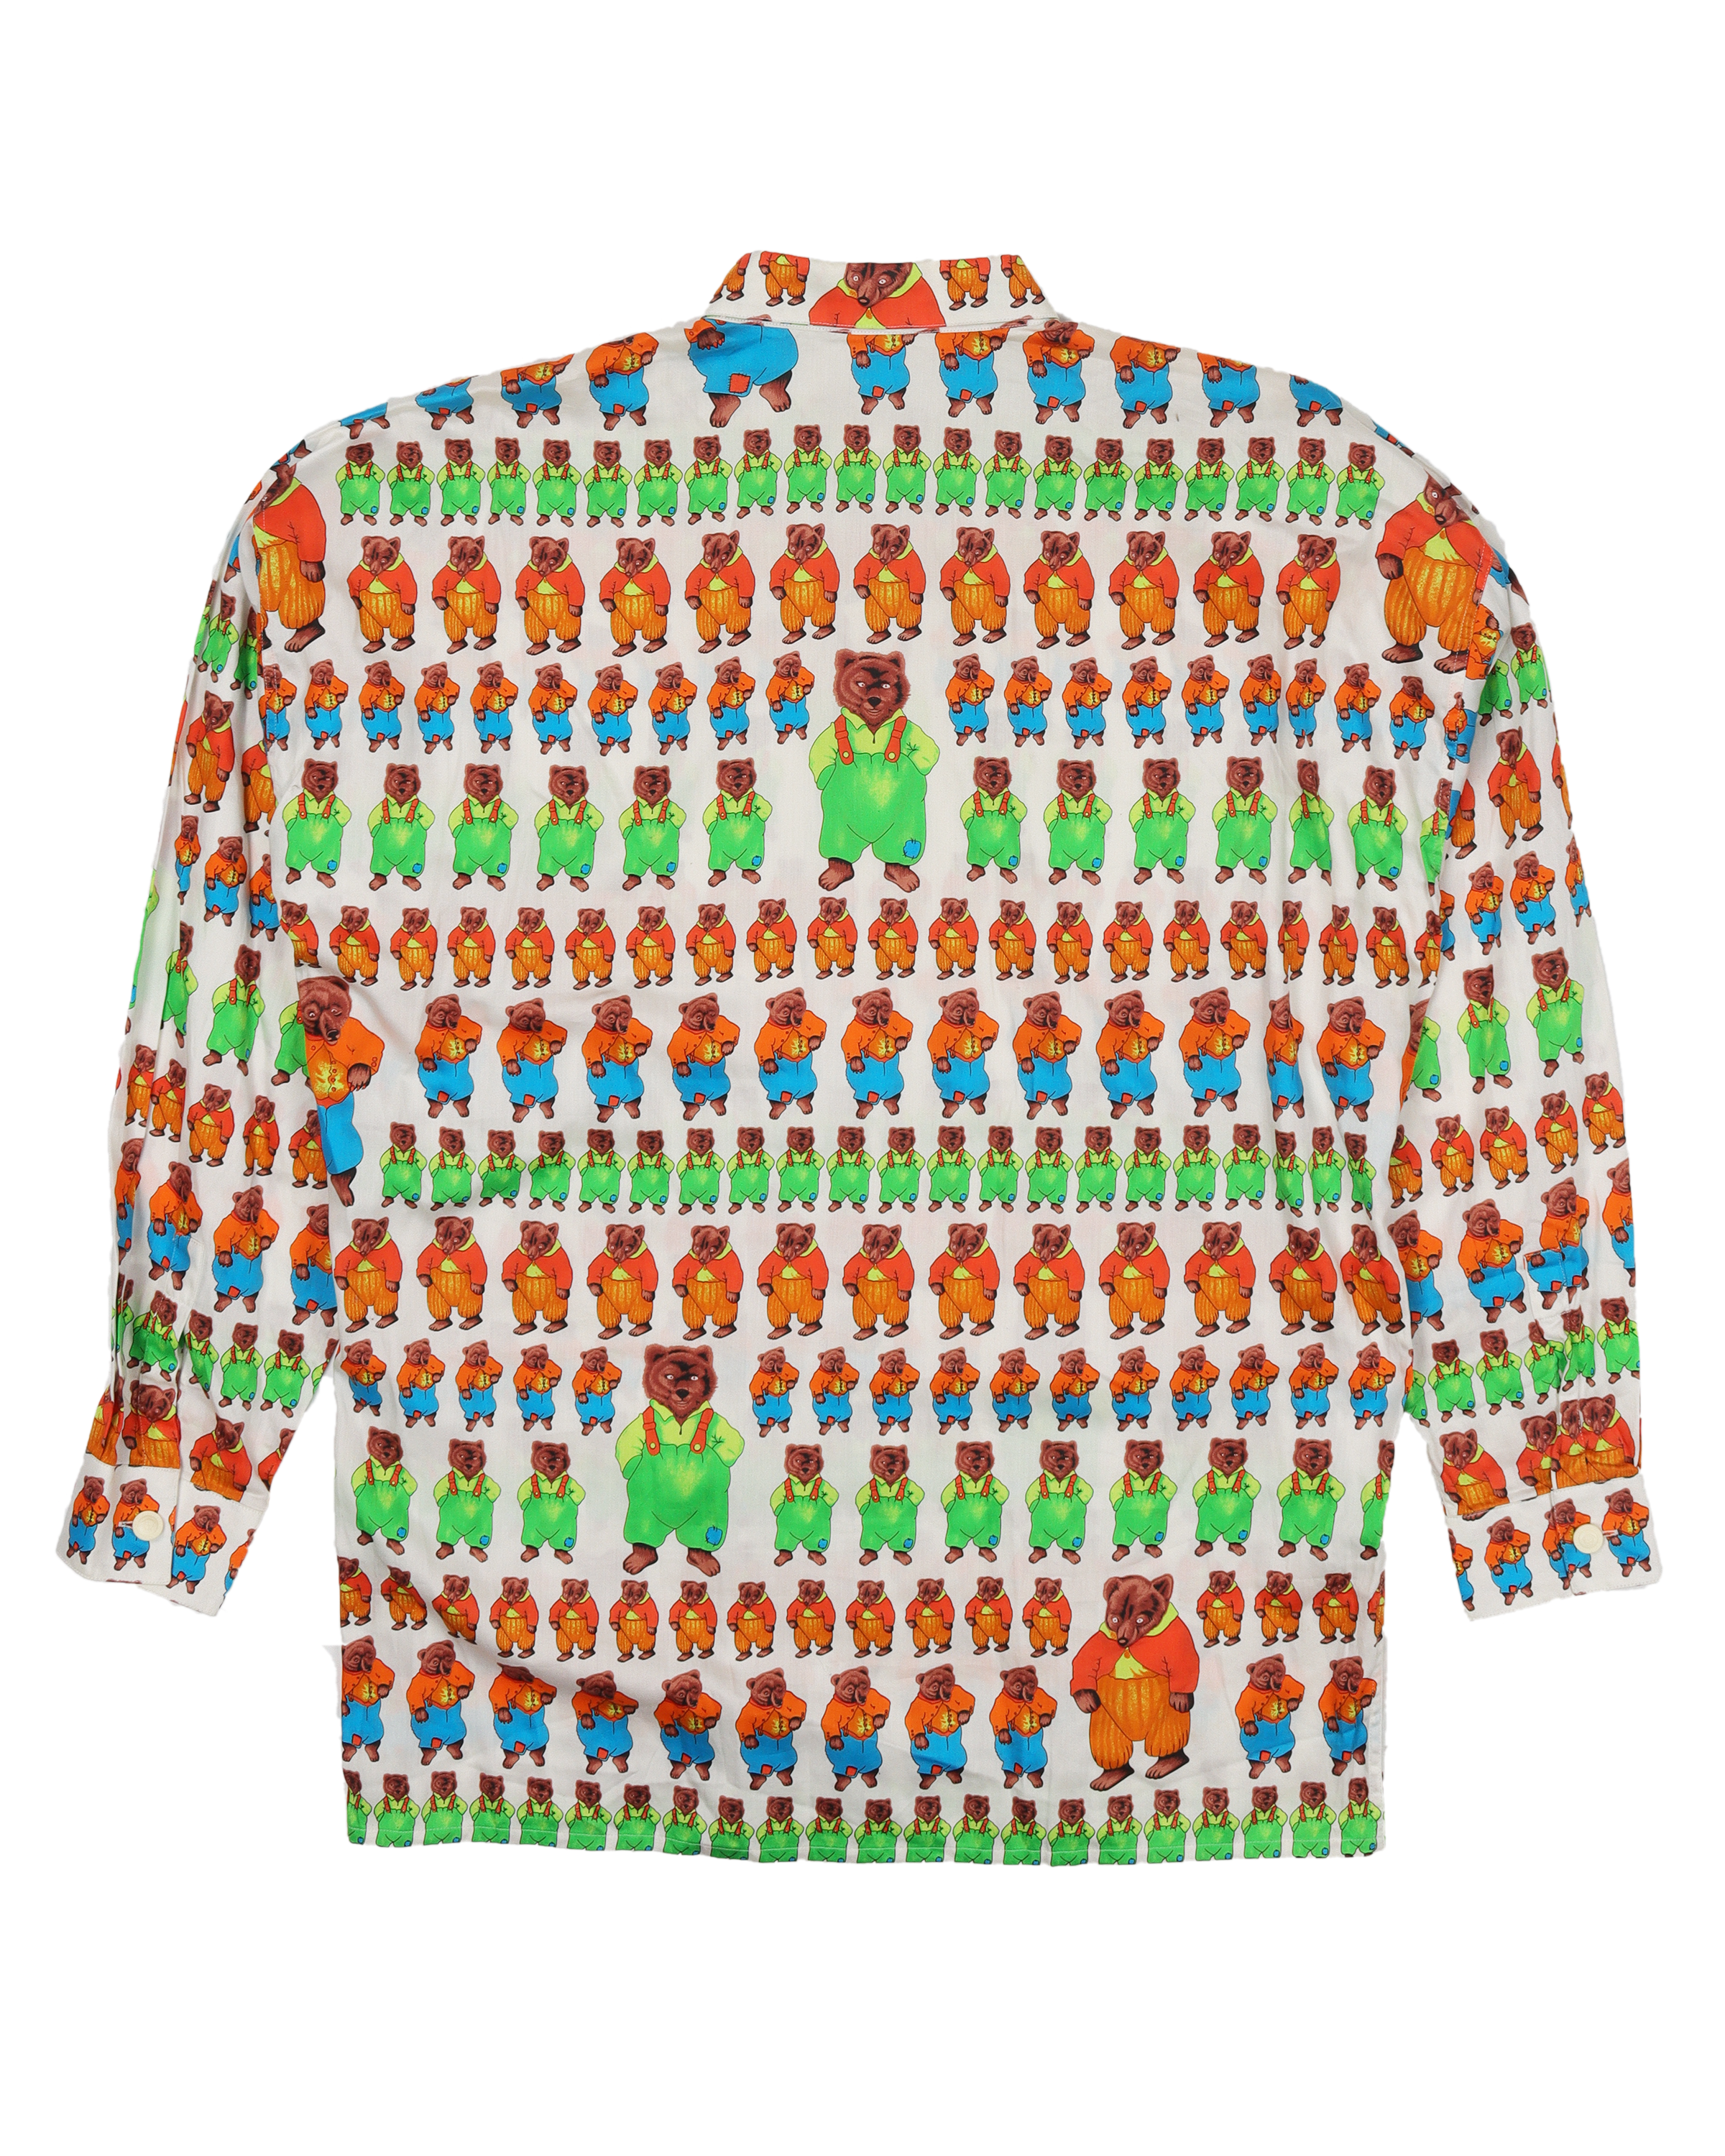 "Bears" Allover Print Shirt